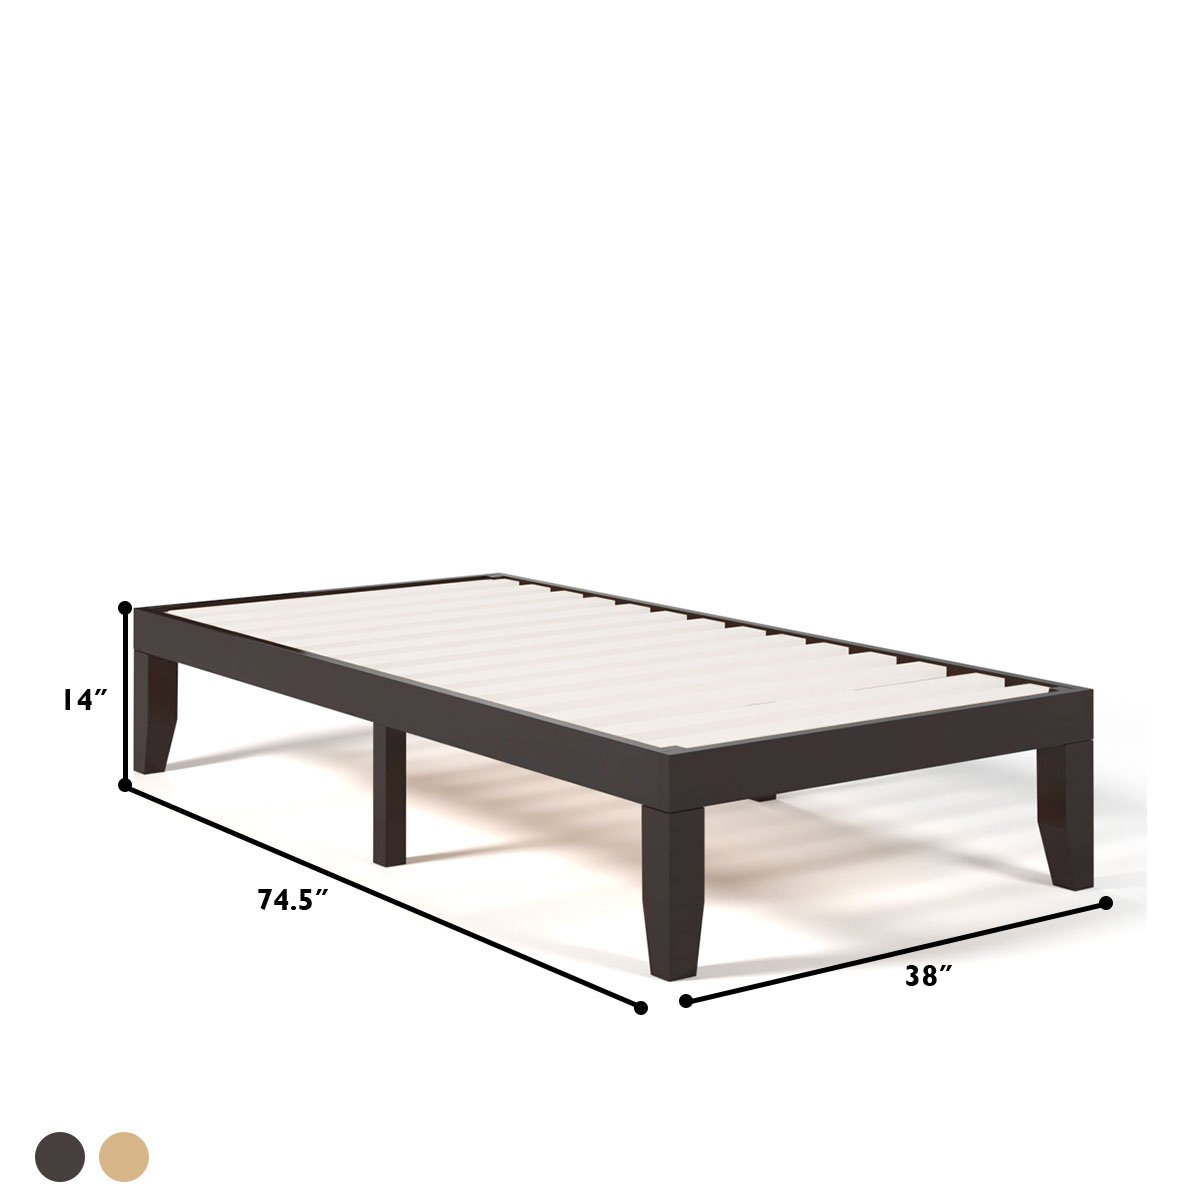 14'' Twin Size Wooden Platform Bed Frame W/ Strong Slat Support - Natural